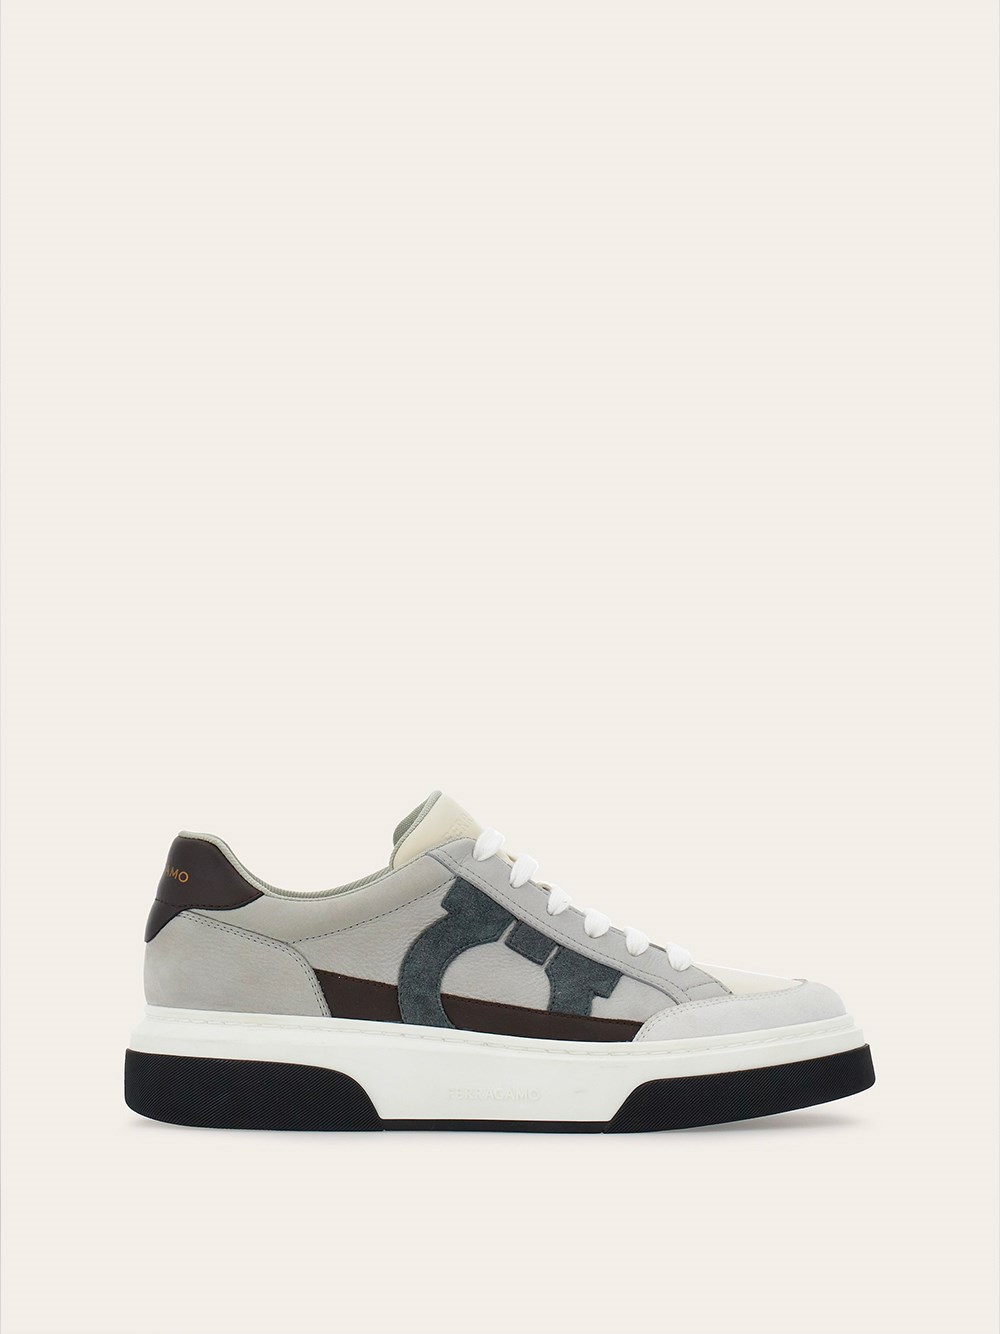 Ferragamo Gancini Low Top Sneakers In Grey